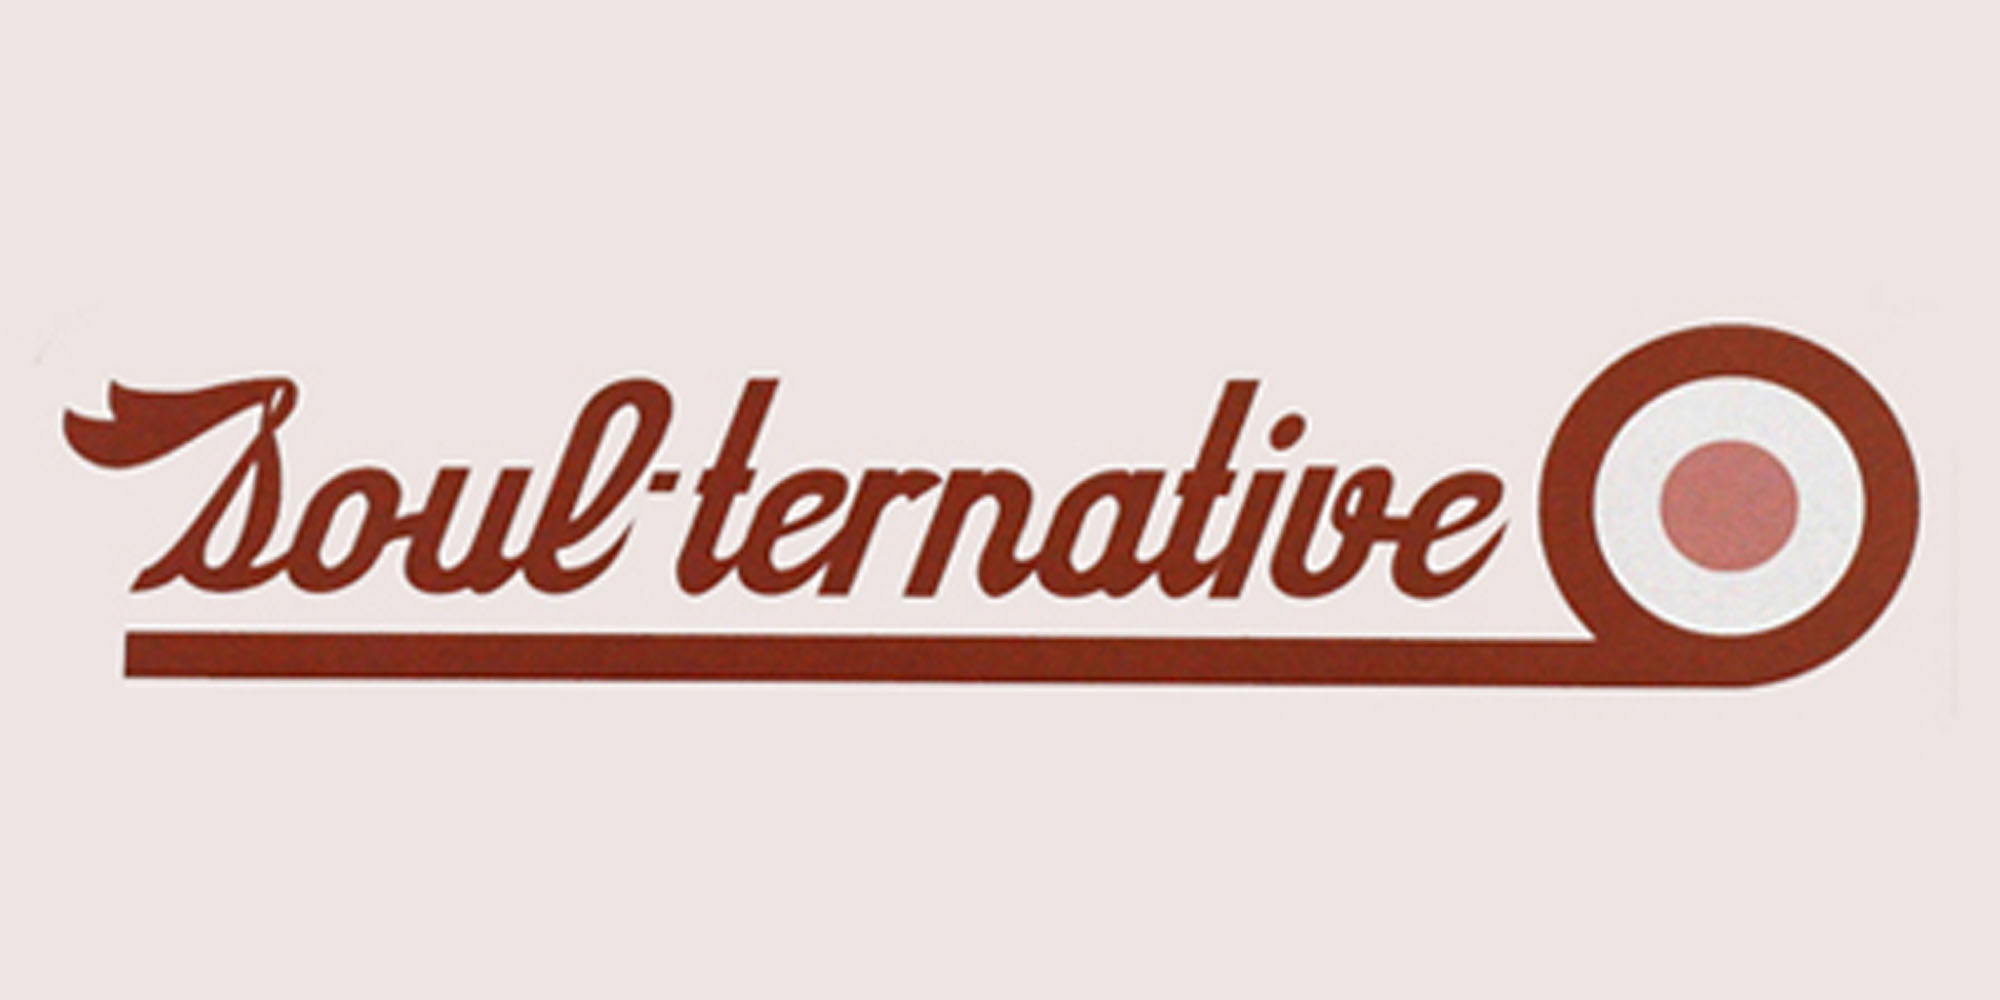 Soul-ternative Logo Design